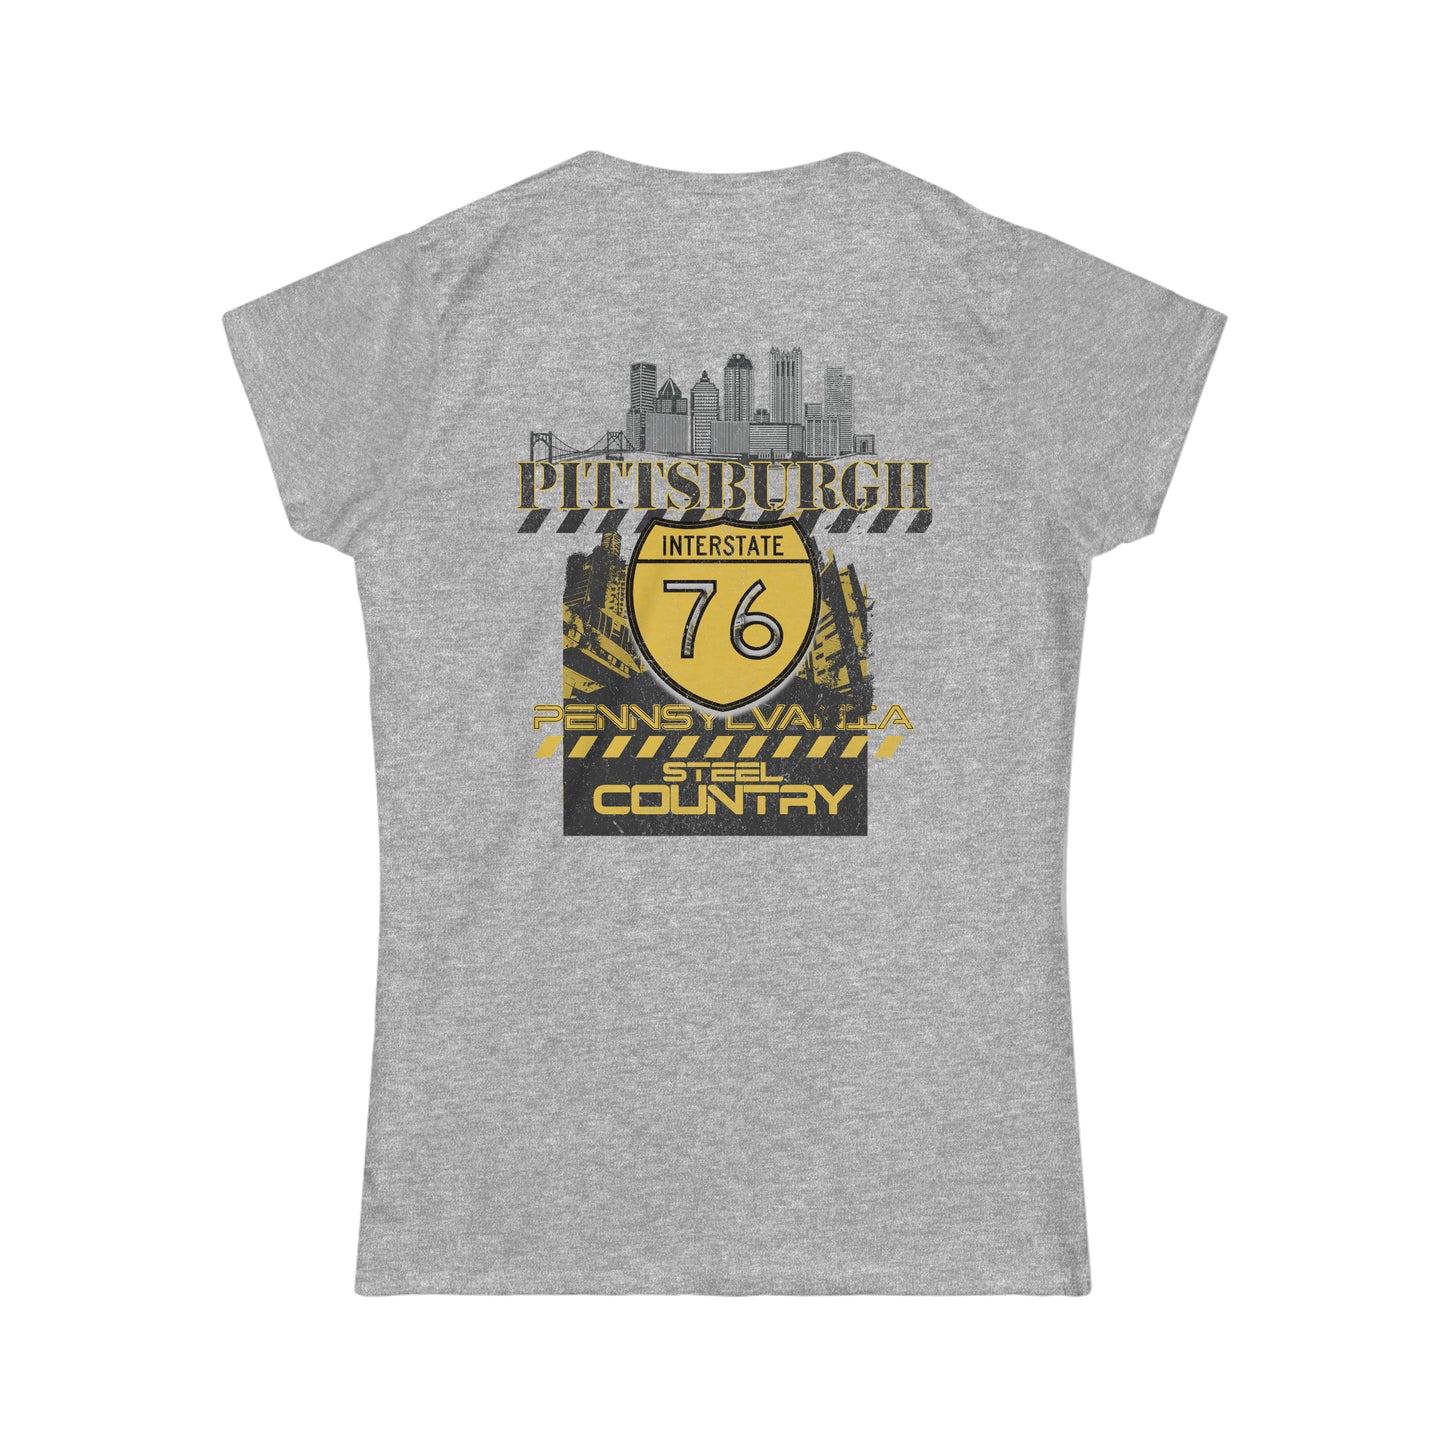 PITTSBURGH, I-76, Women's Softstyle Tee